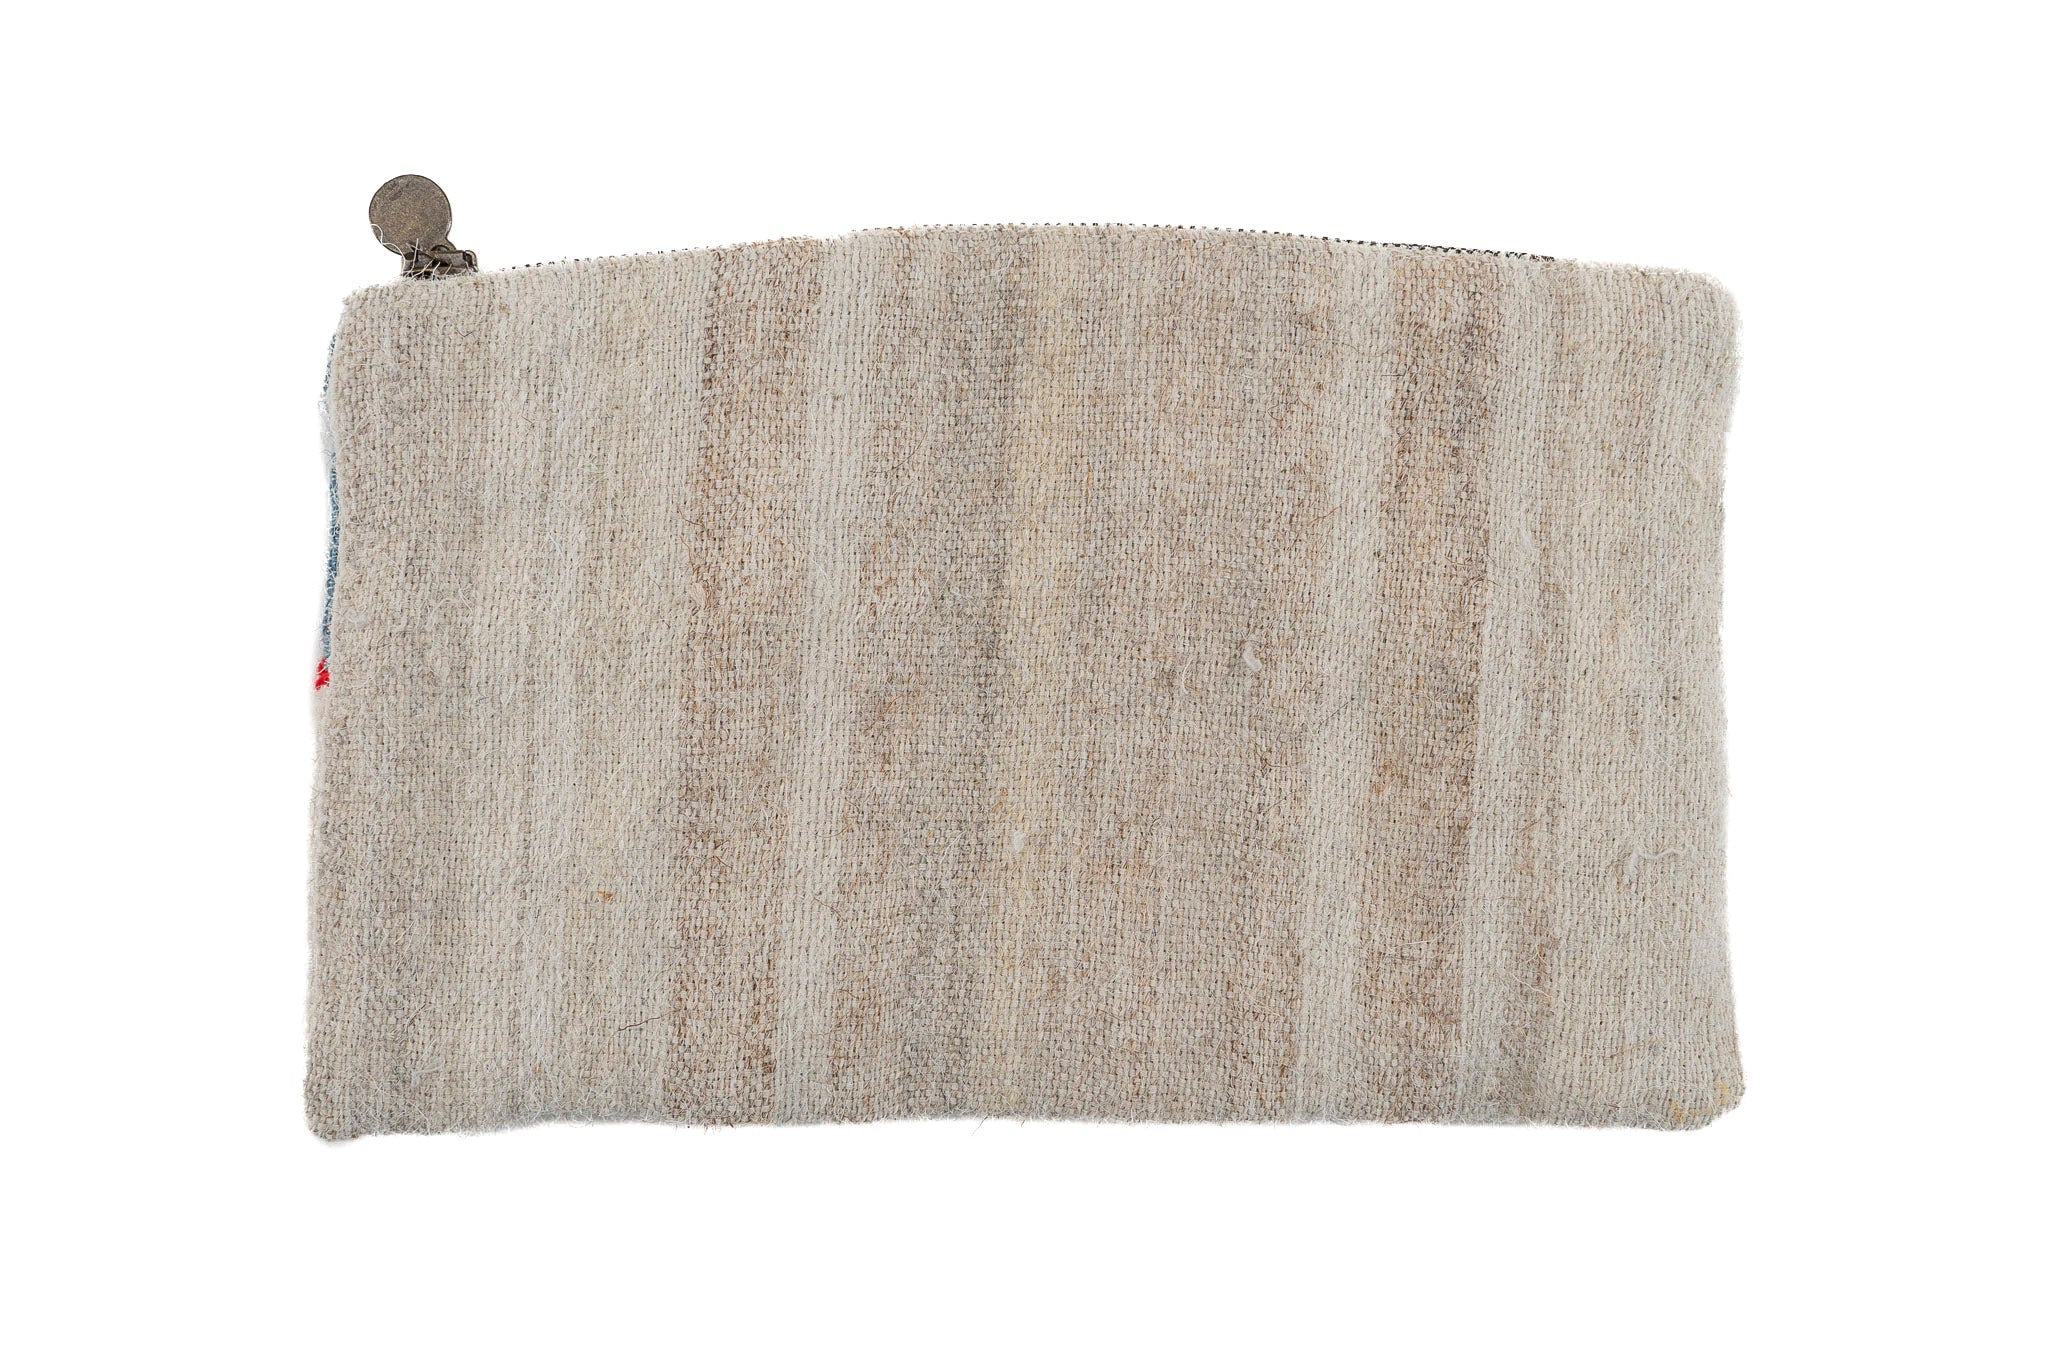 Bag: Handwoven wool, interior handwoven antique hemp lining - BG71